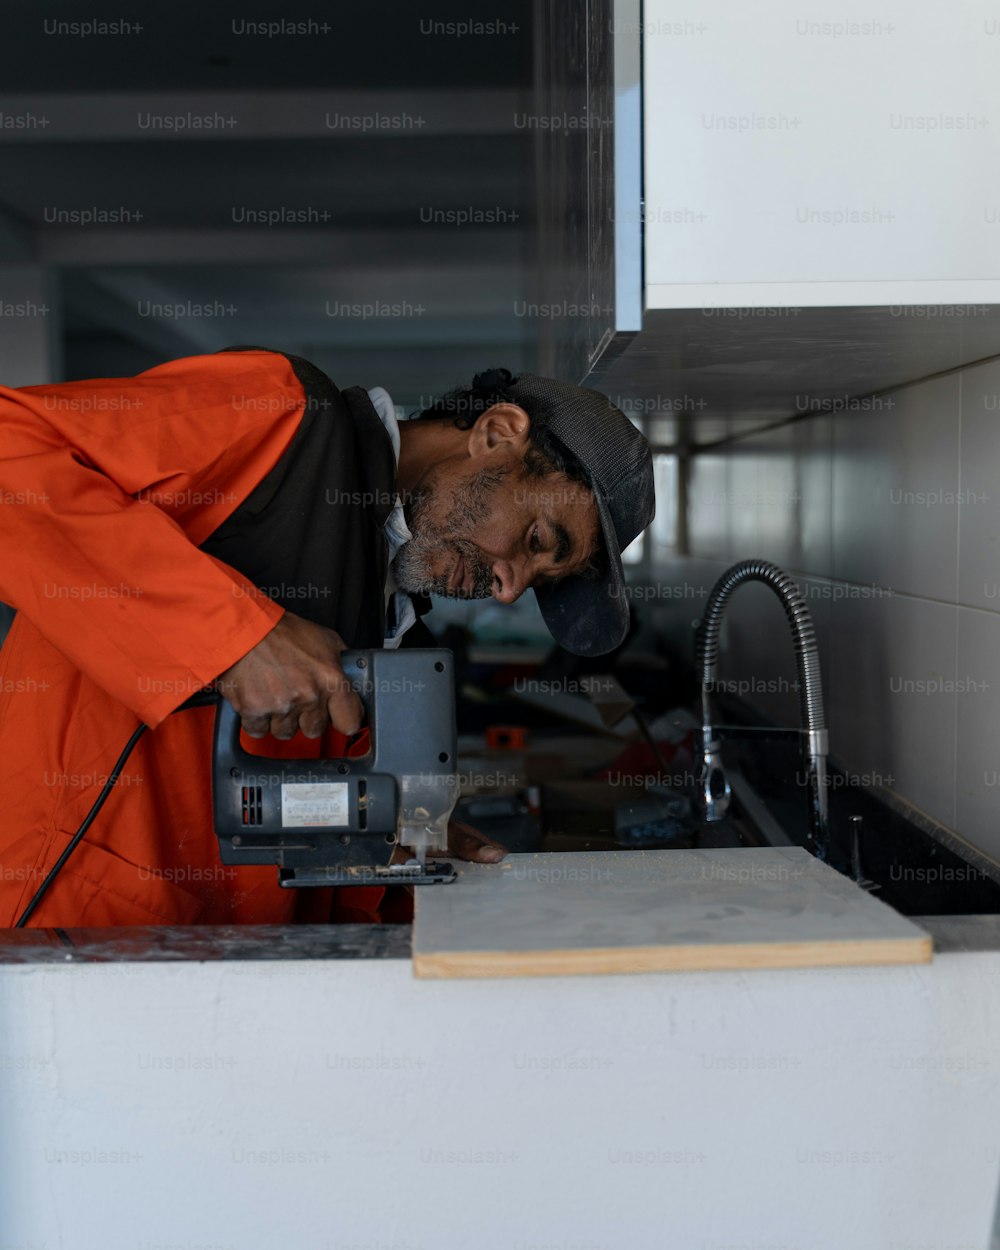 a man in an orange jumpsuit working on a machine